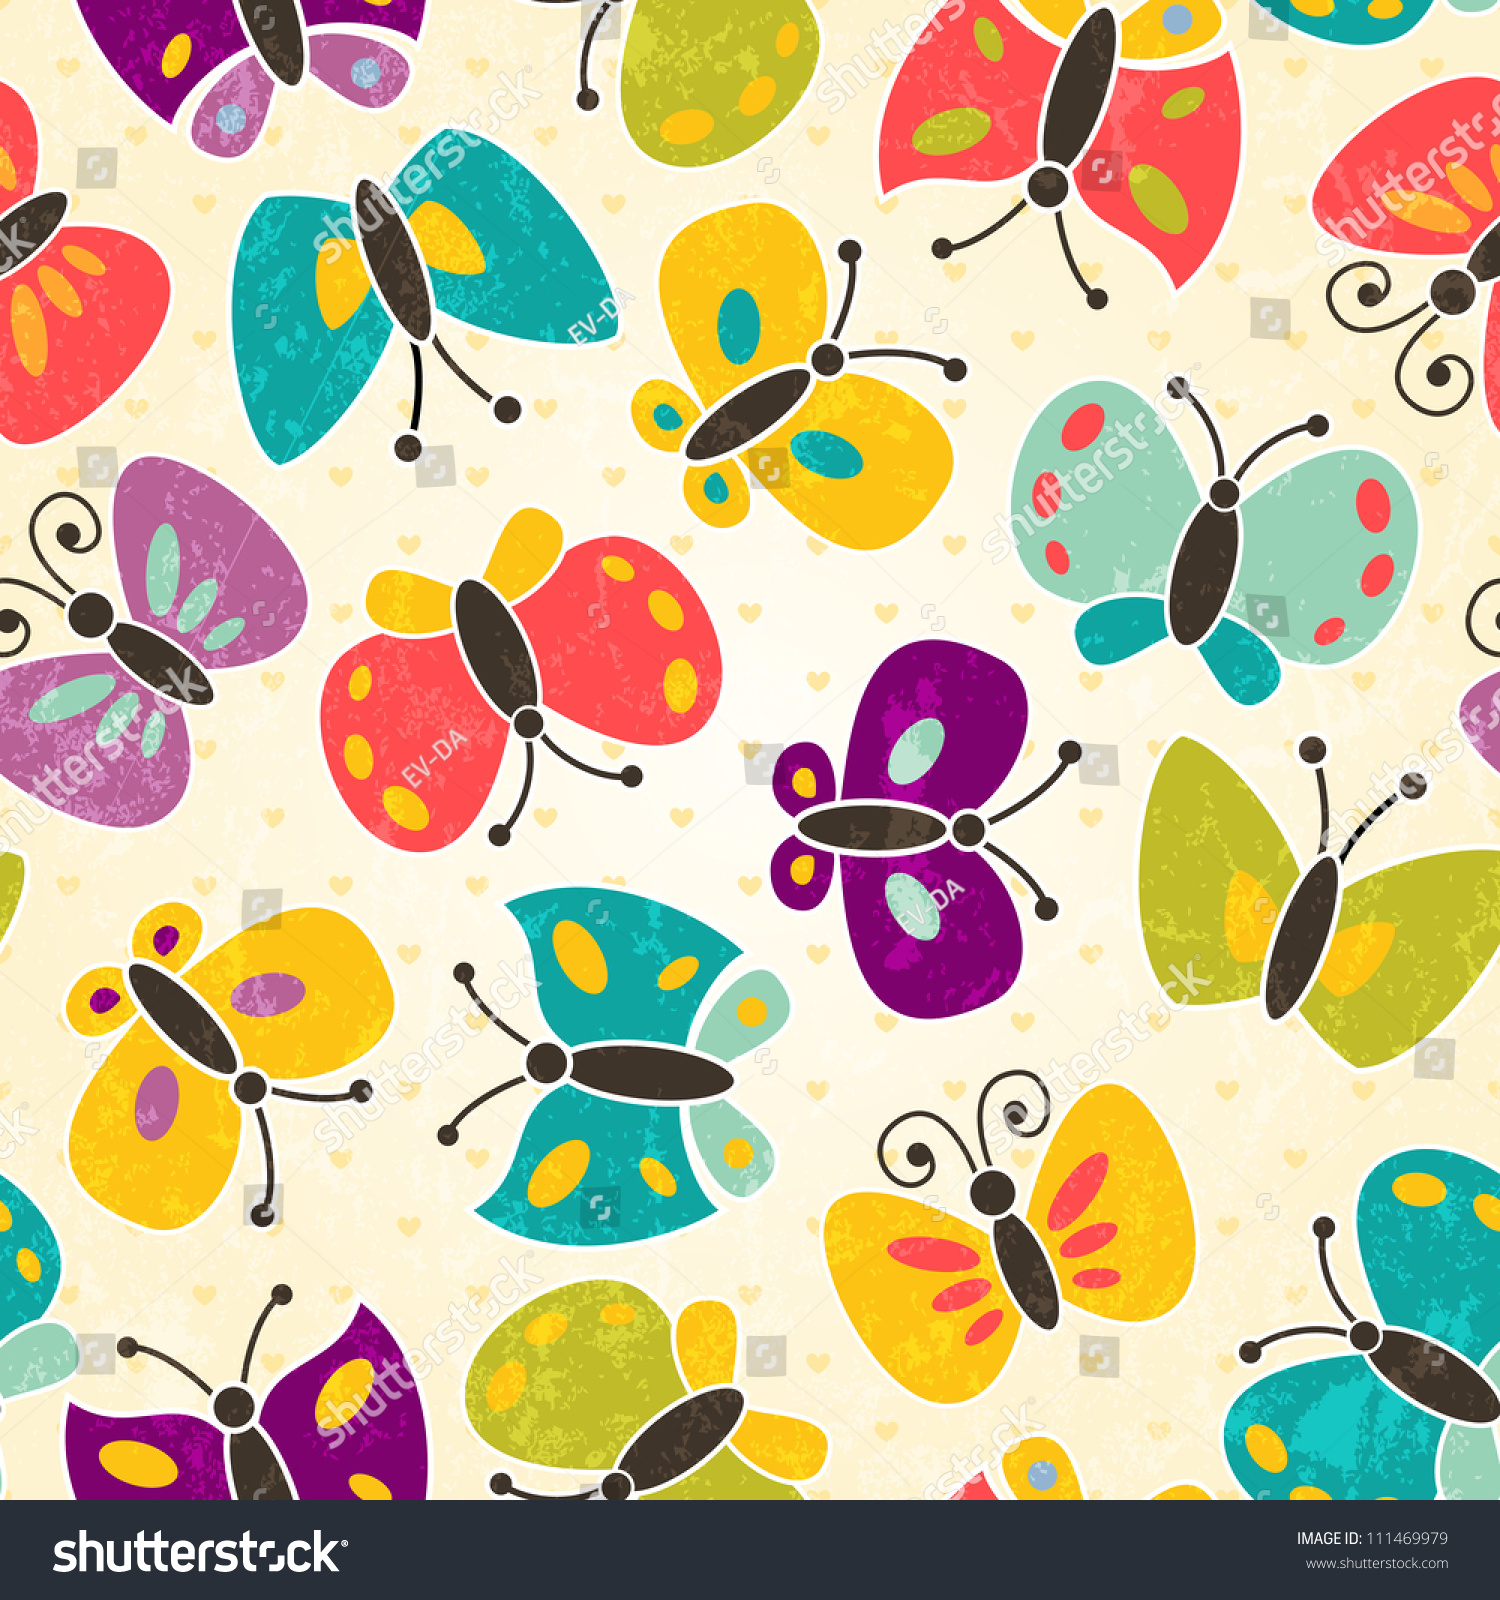 Butterfly Seamless Pattern. Eps 10 Vector Illustration. - 111469979 ...